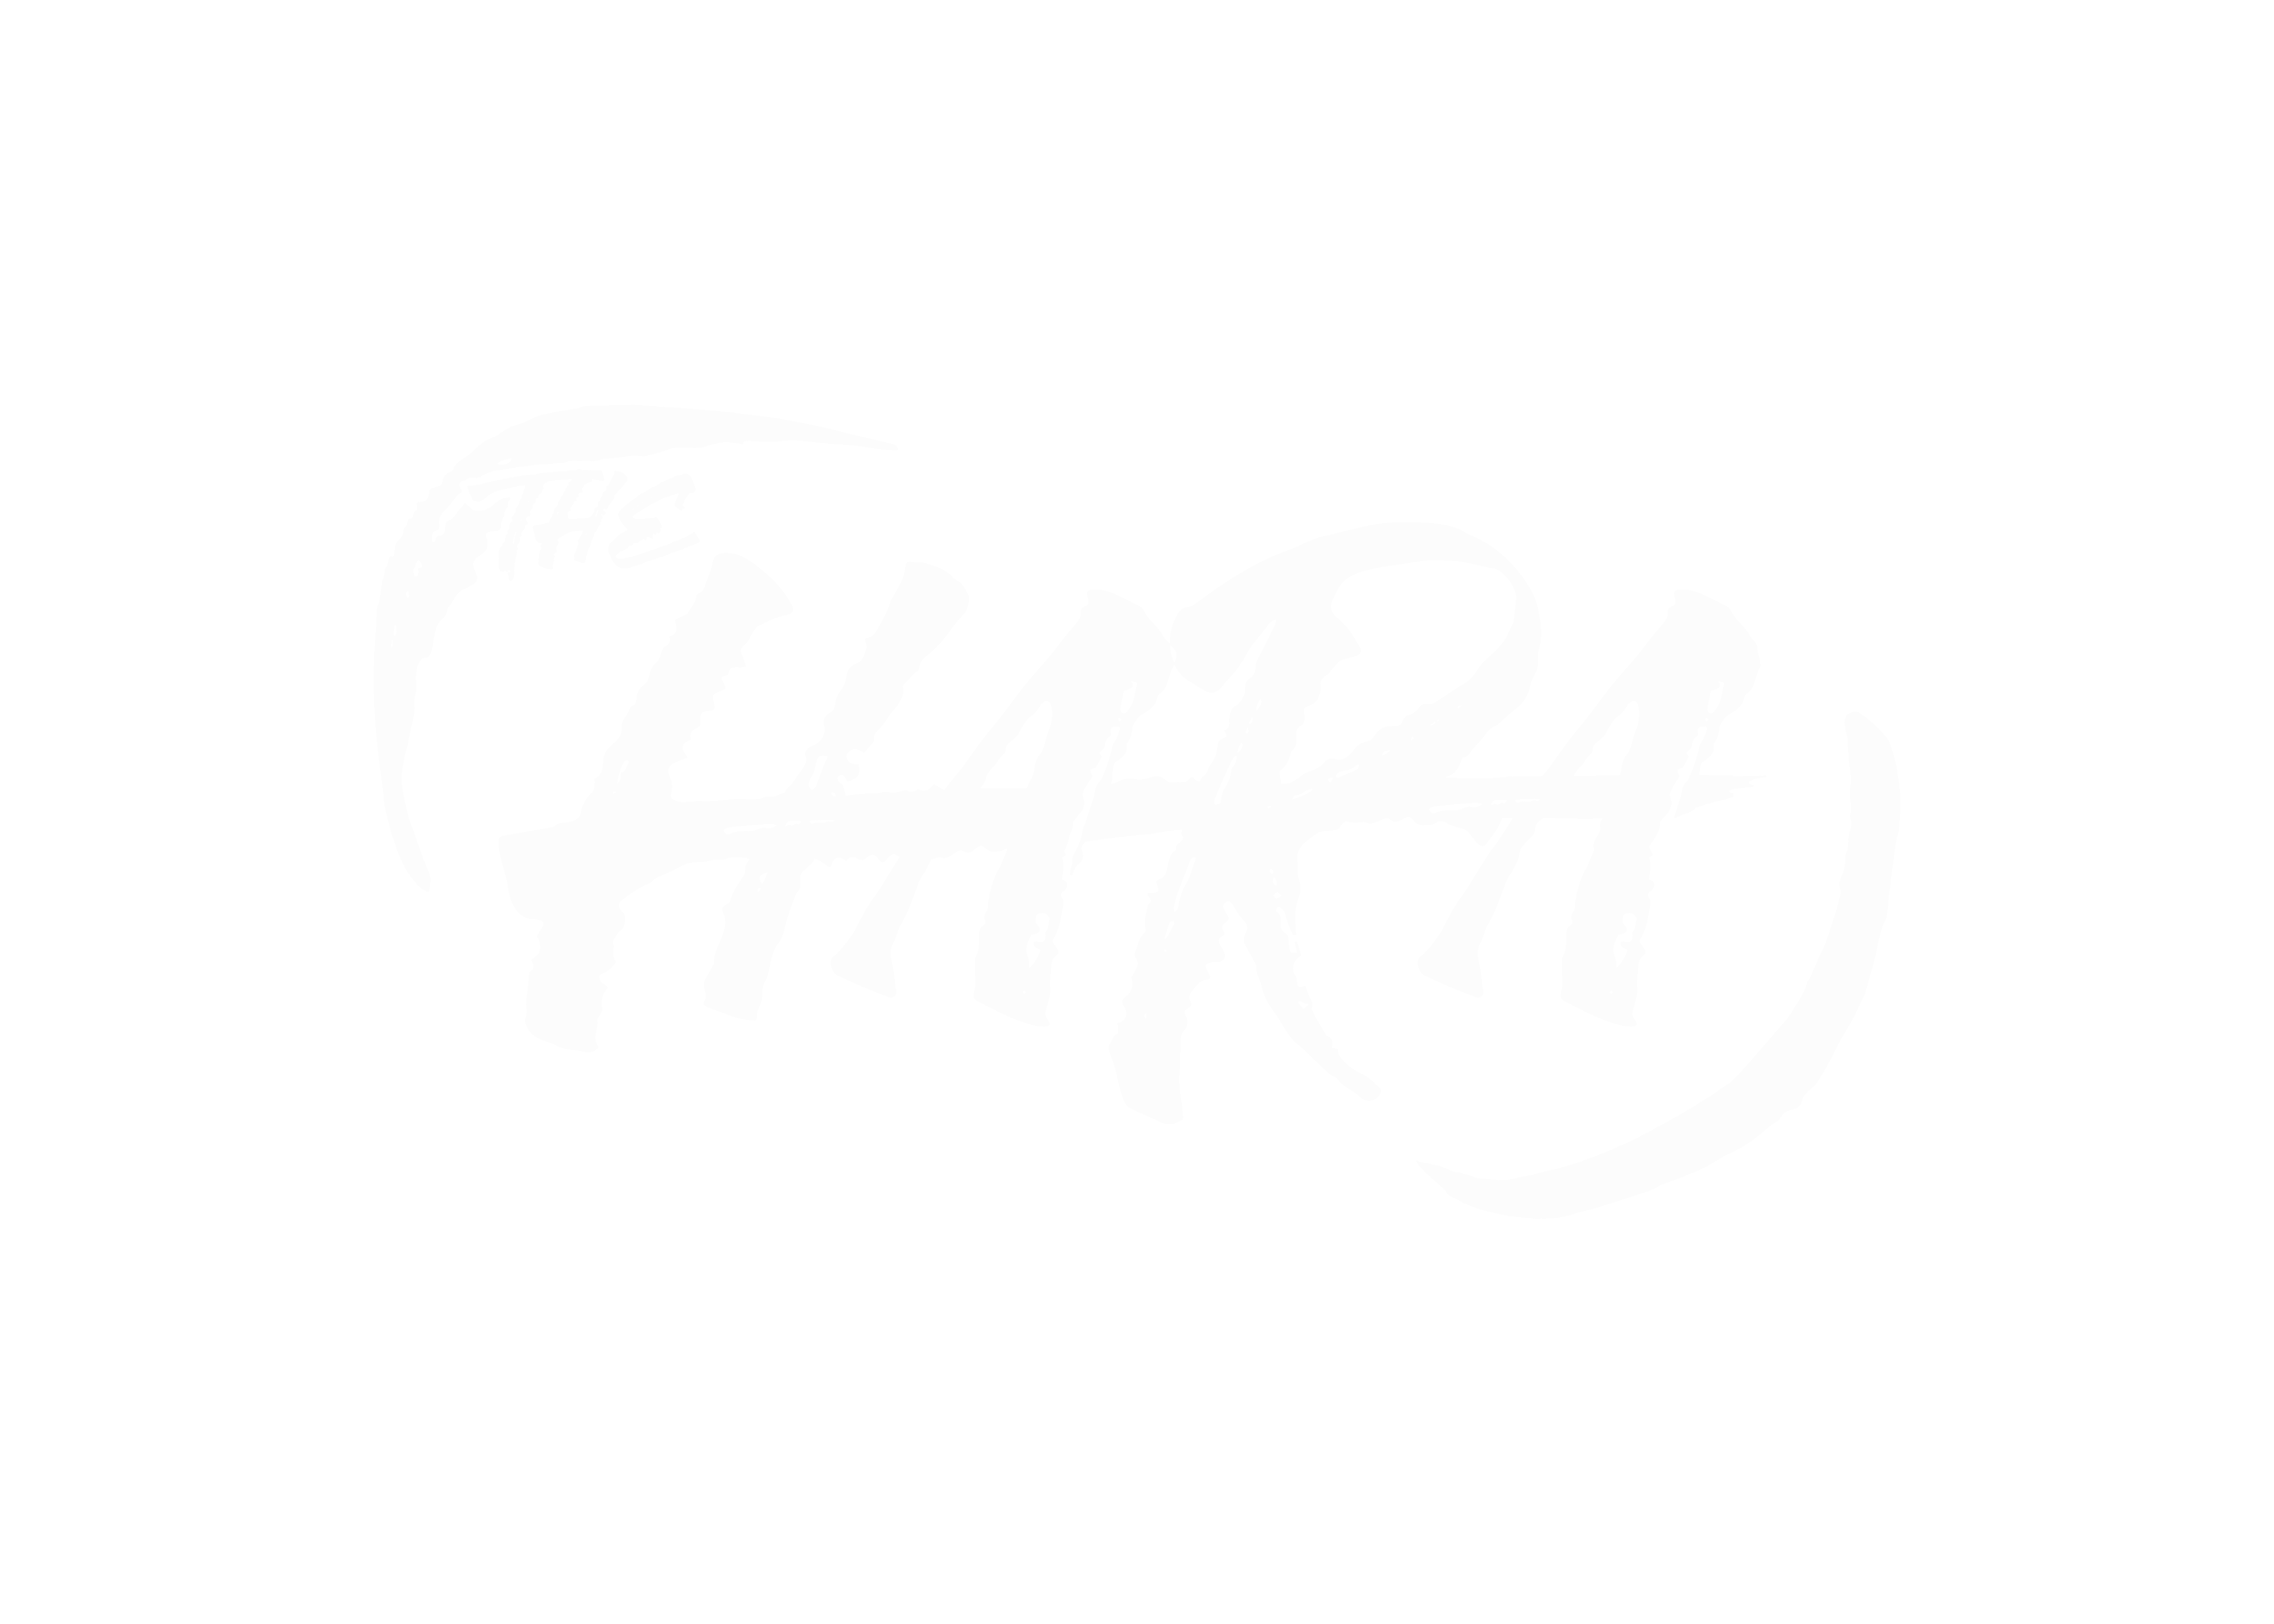 The hara merch